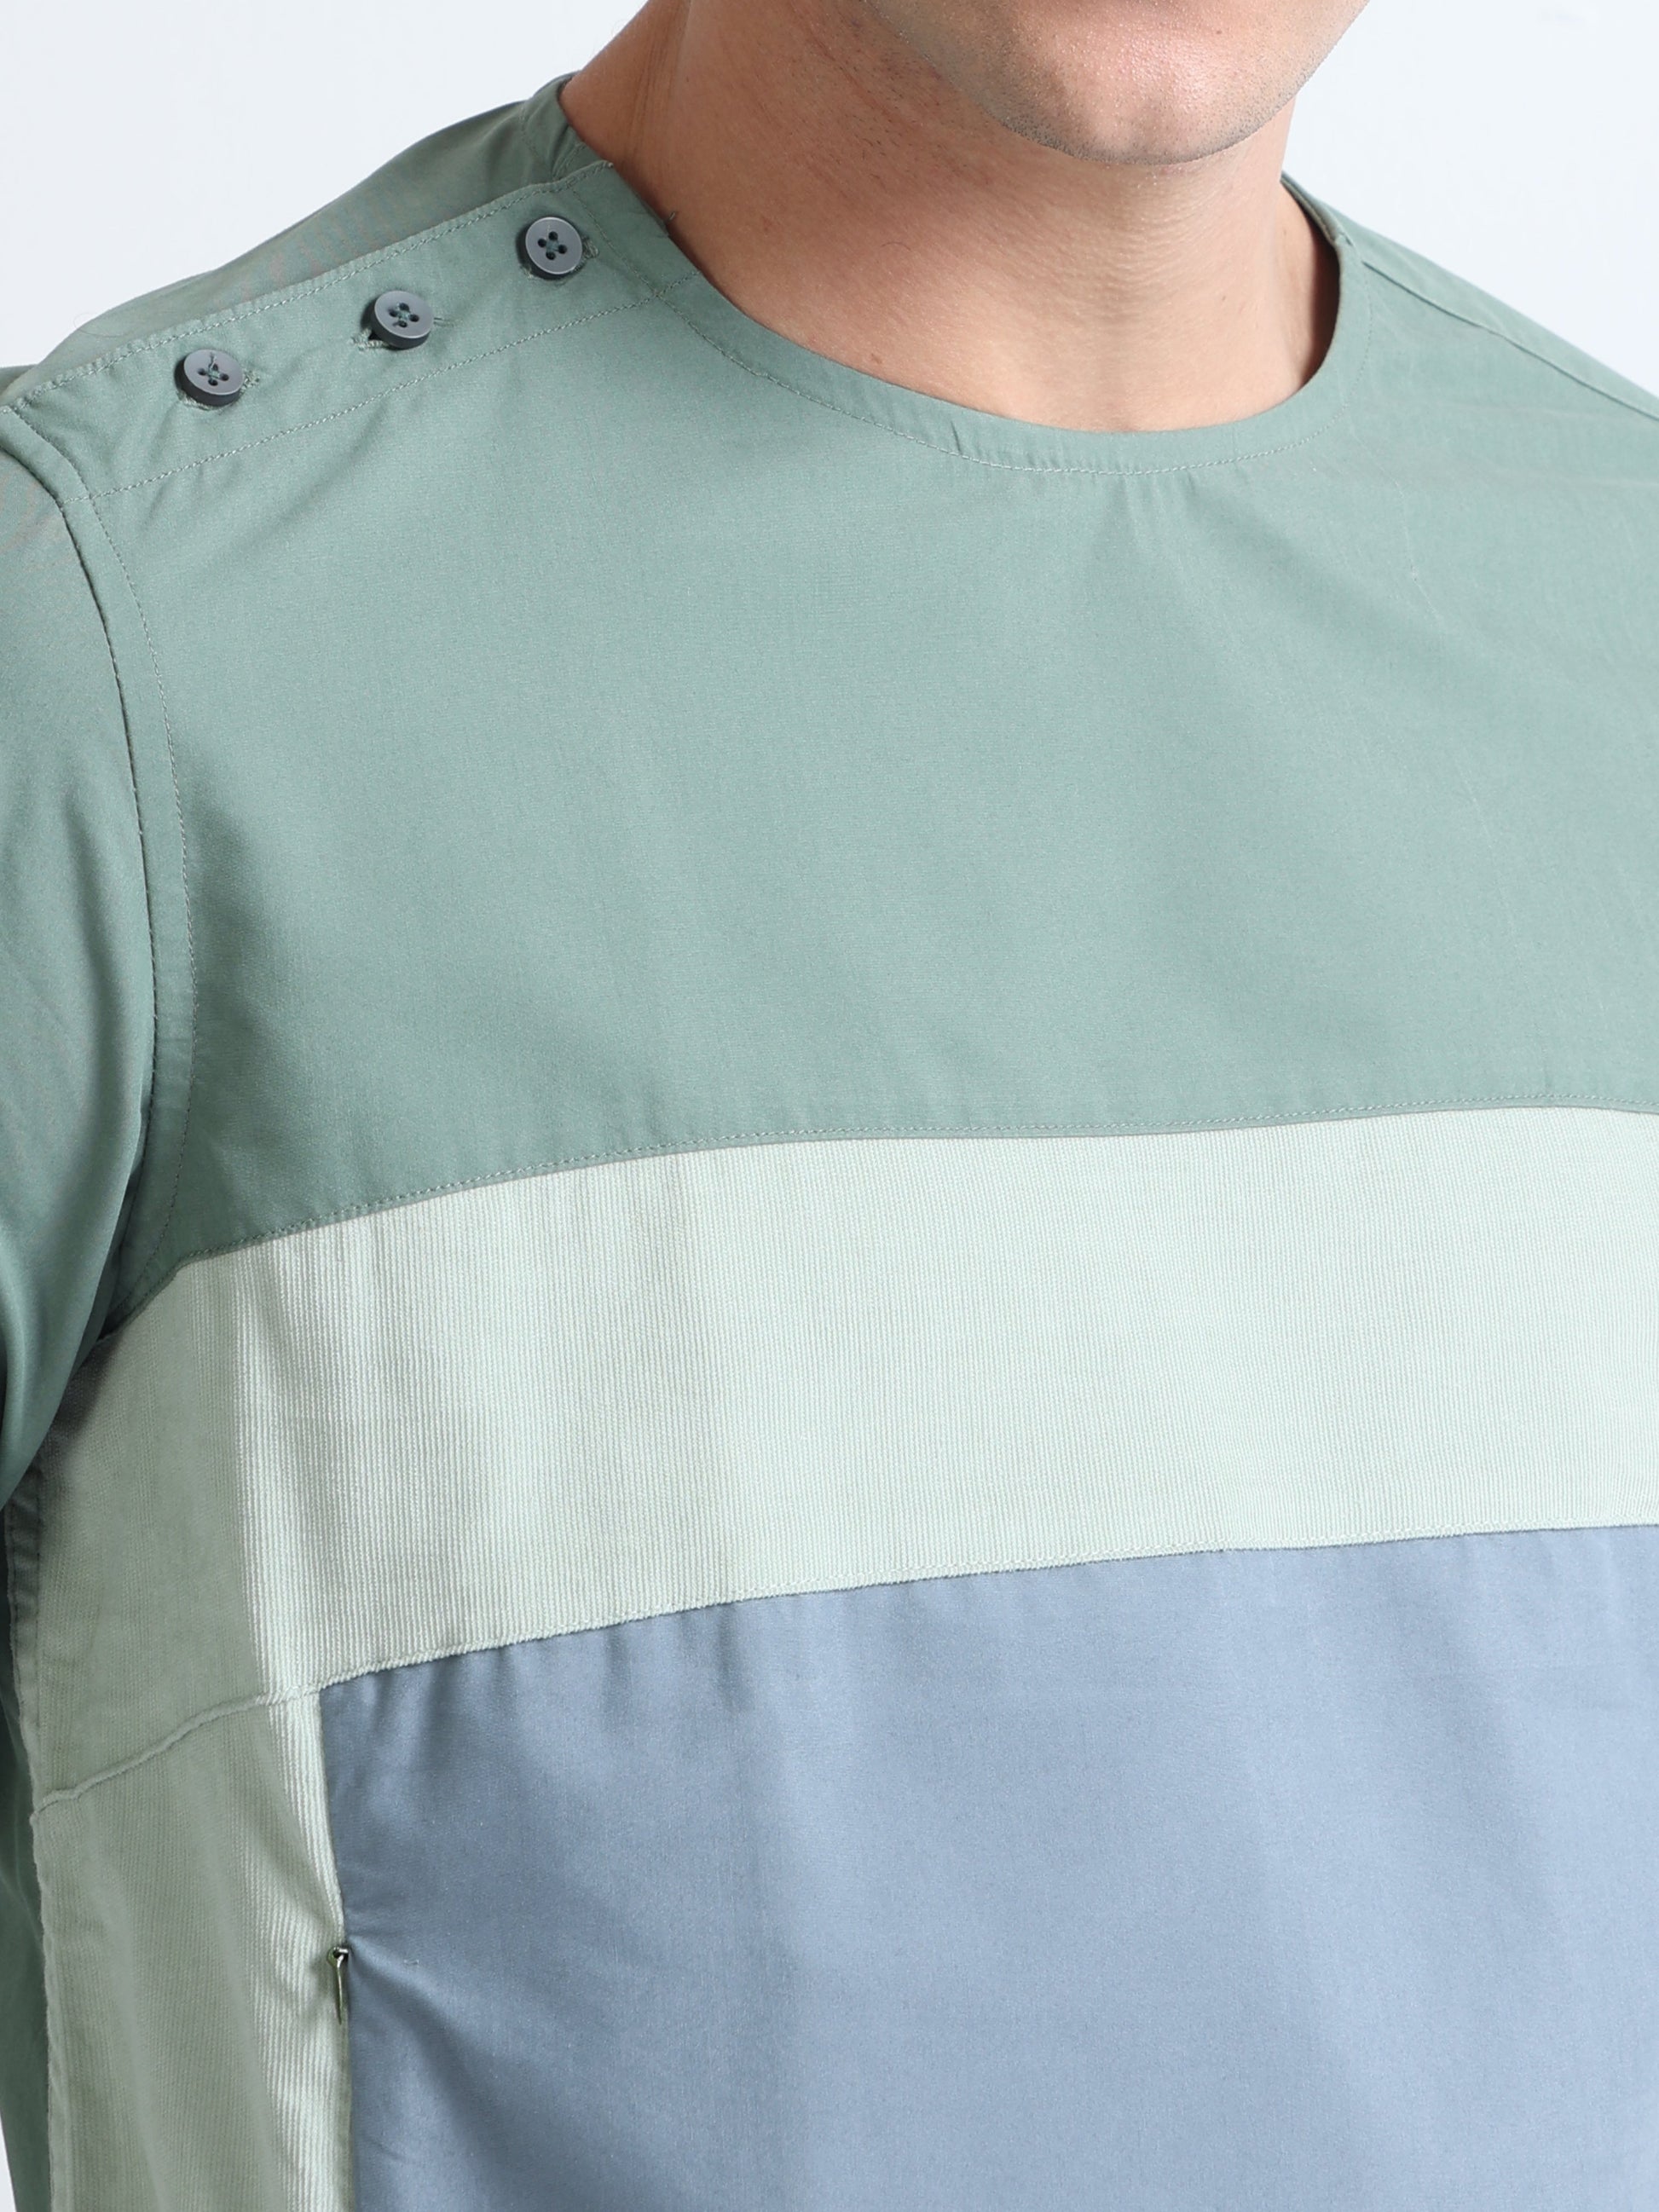 Buy Open Shoulder Crew Neck Stylish Shirt Online.